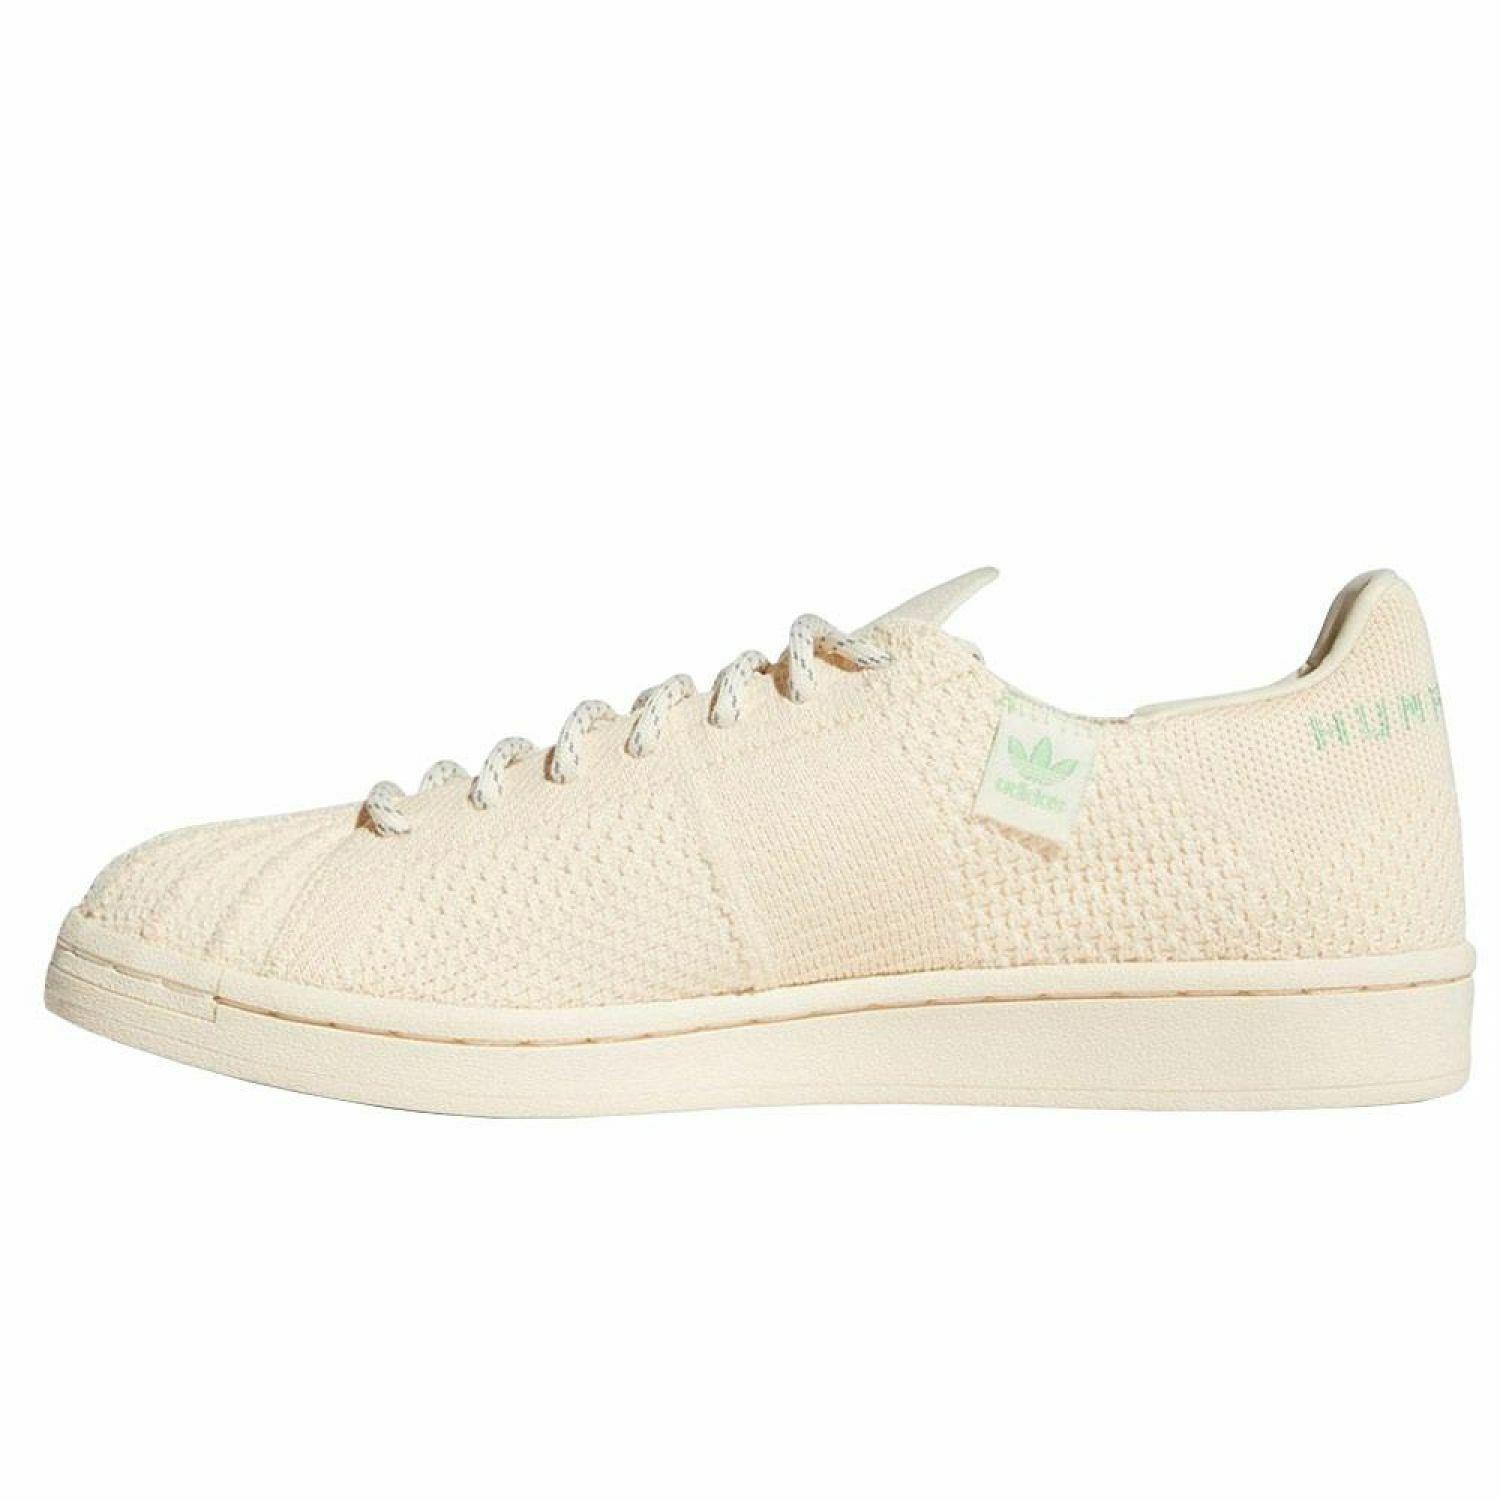 Adidas x Pharrell Superstar PK Cream Mens S42931 Ecru Primeknit Shoes Size 8